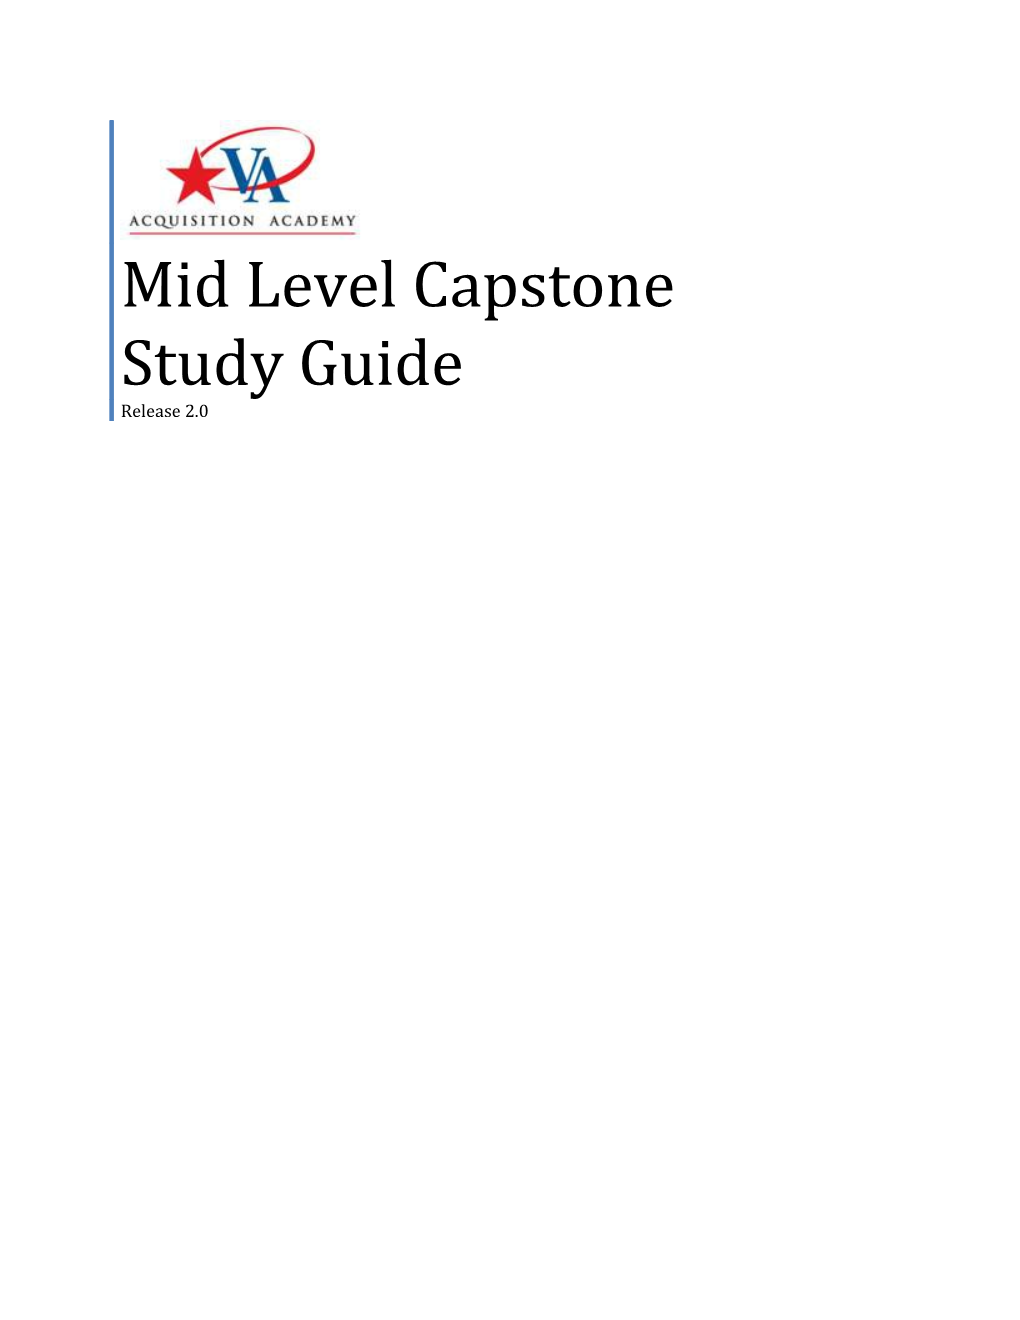 Senior Level Capstone Study Guide